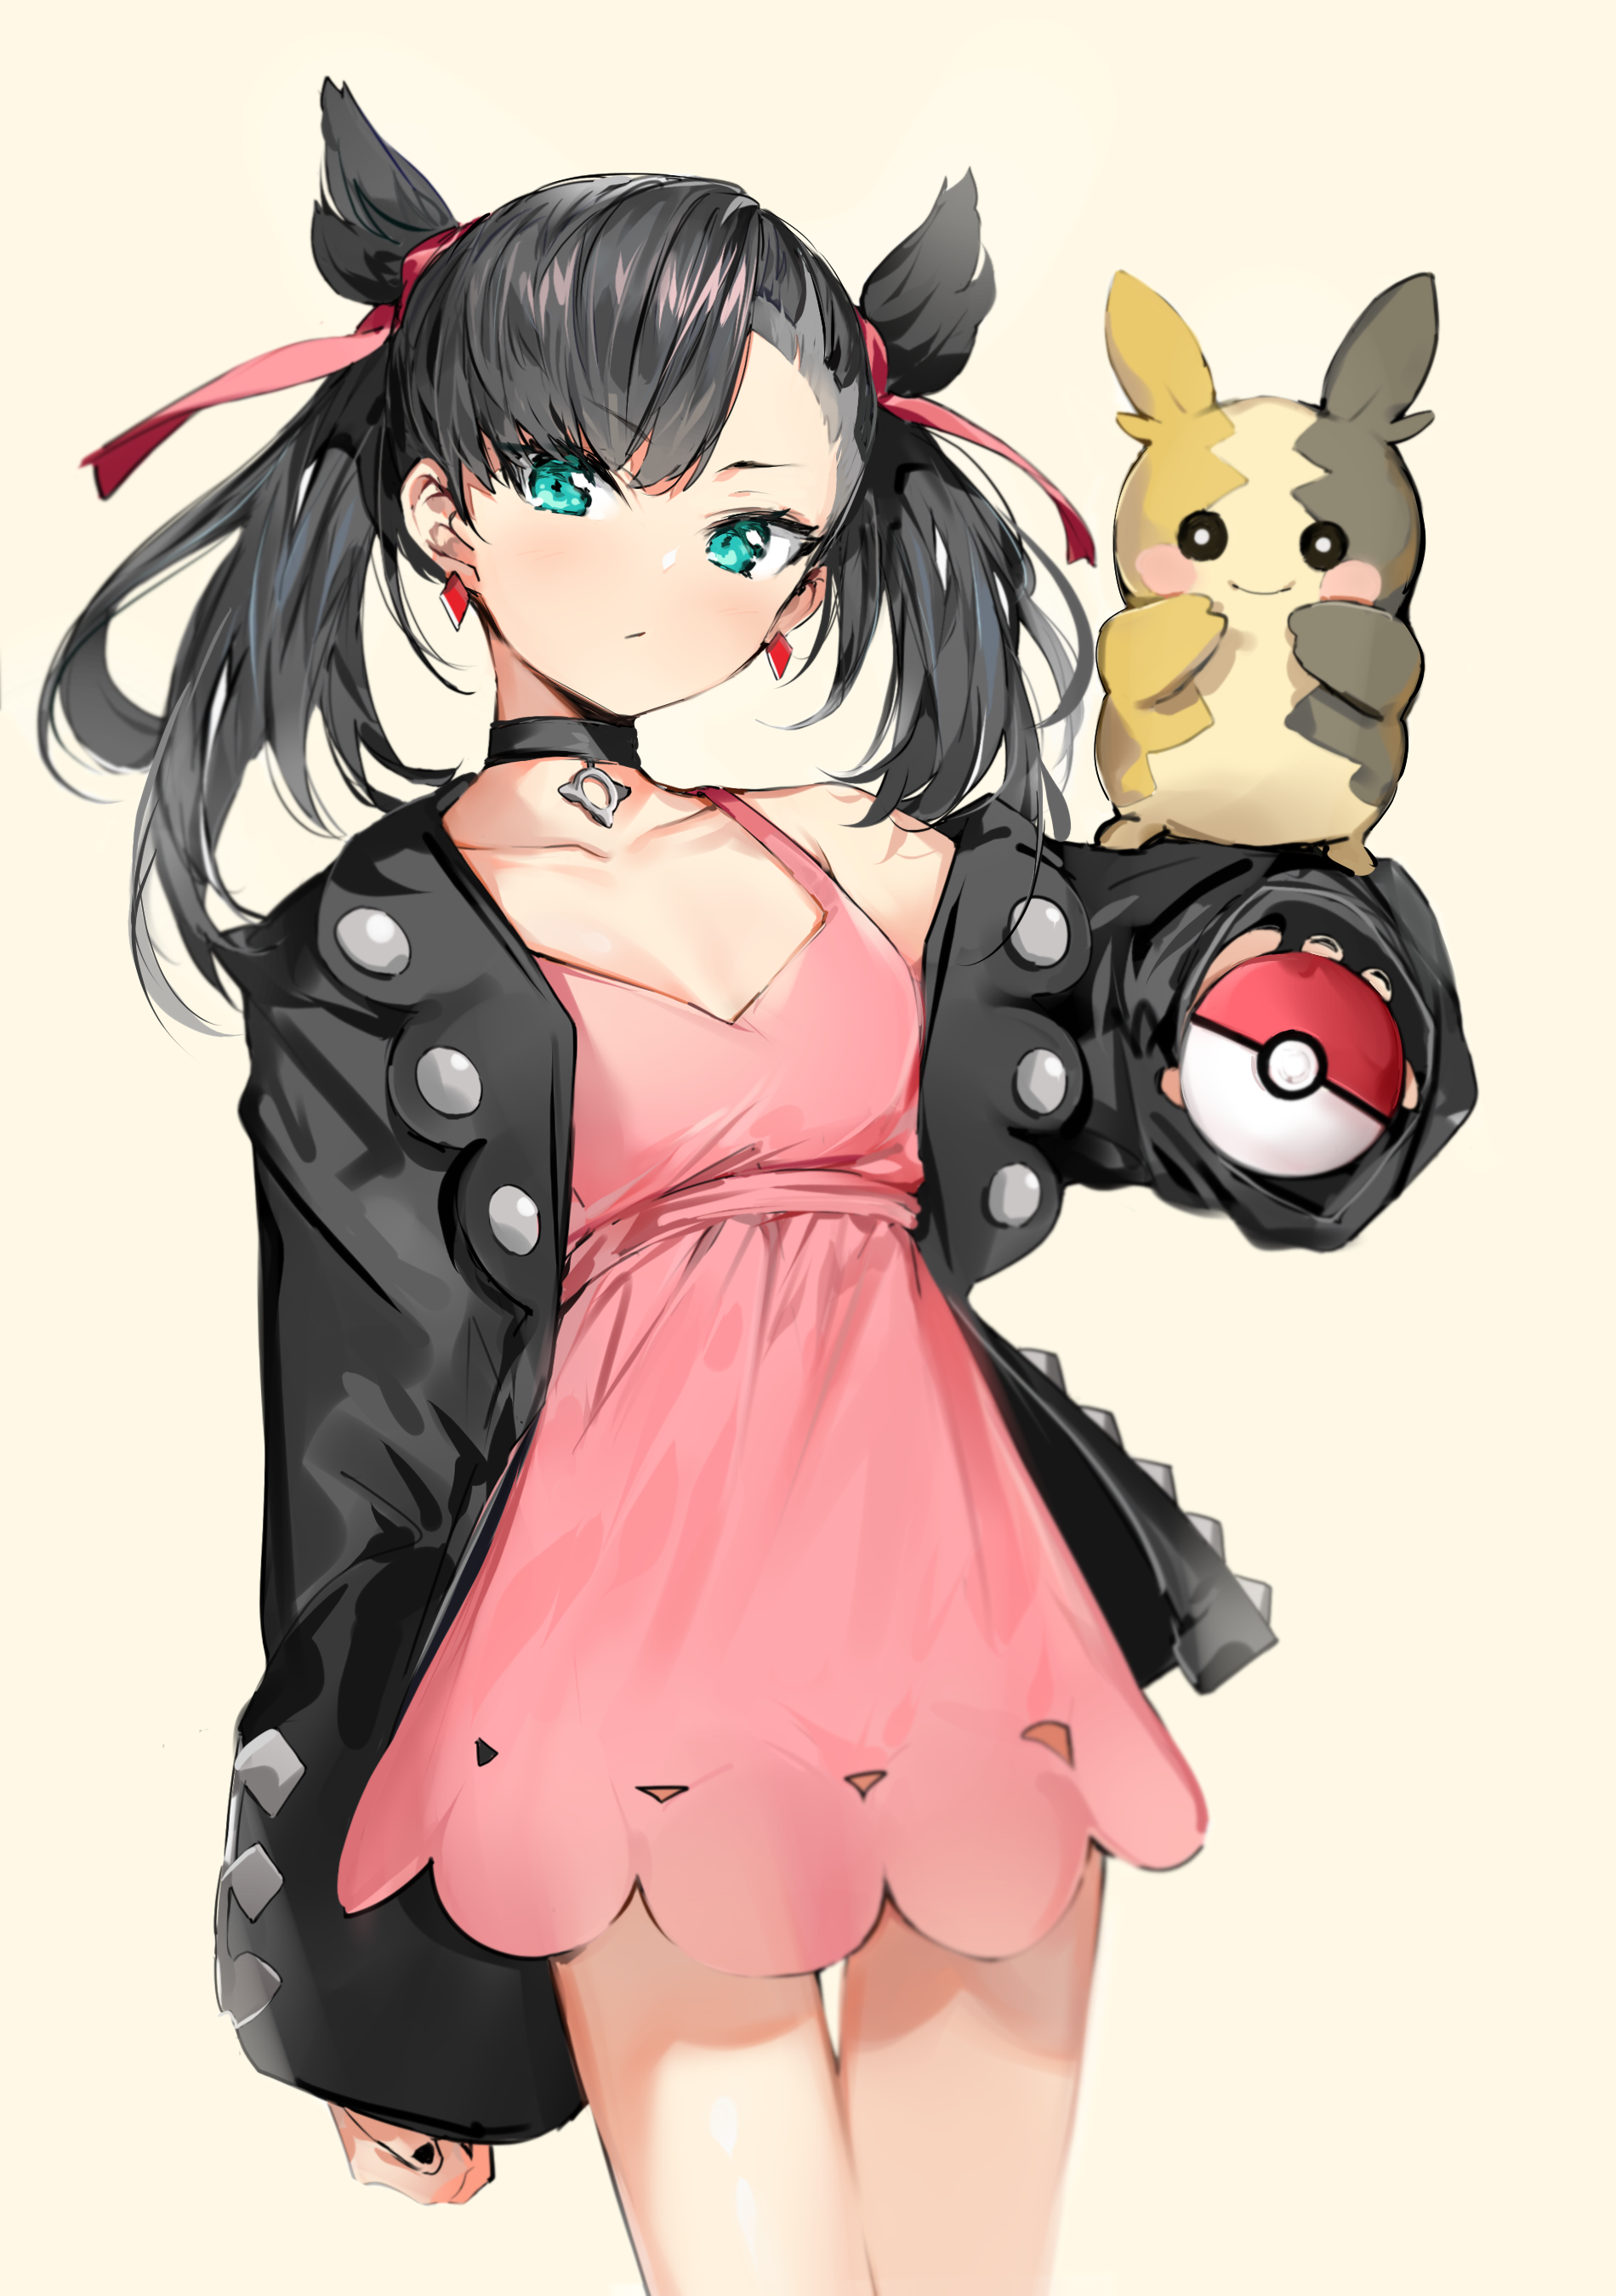 Anime 1900x2700 anime anime girls digital art artwork 2D portrait display Pokémon Marnie (Pokémon) dark hair aqua eyes open jacket dress Silver (artist)